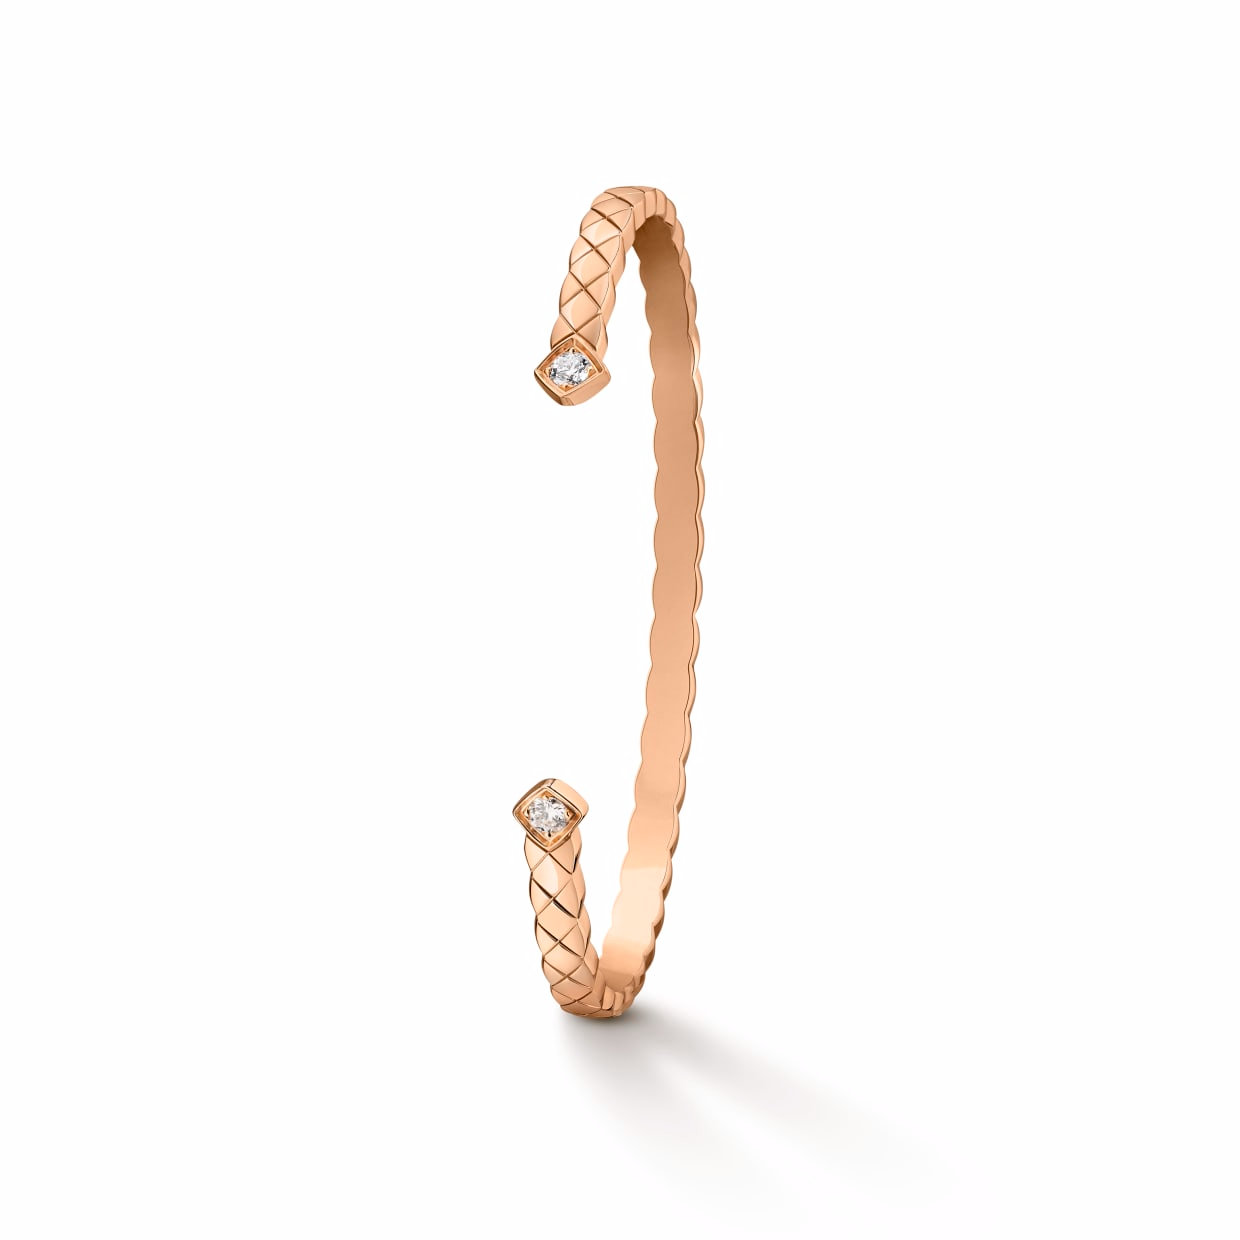 OEM/ODM Jewelry Custom design jewelry bangle in 18K pink gold plating silver jewelry